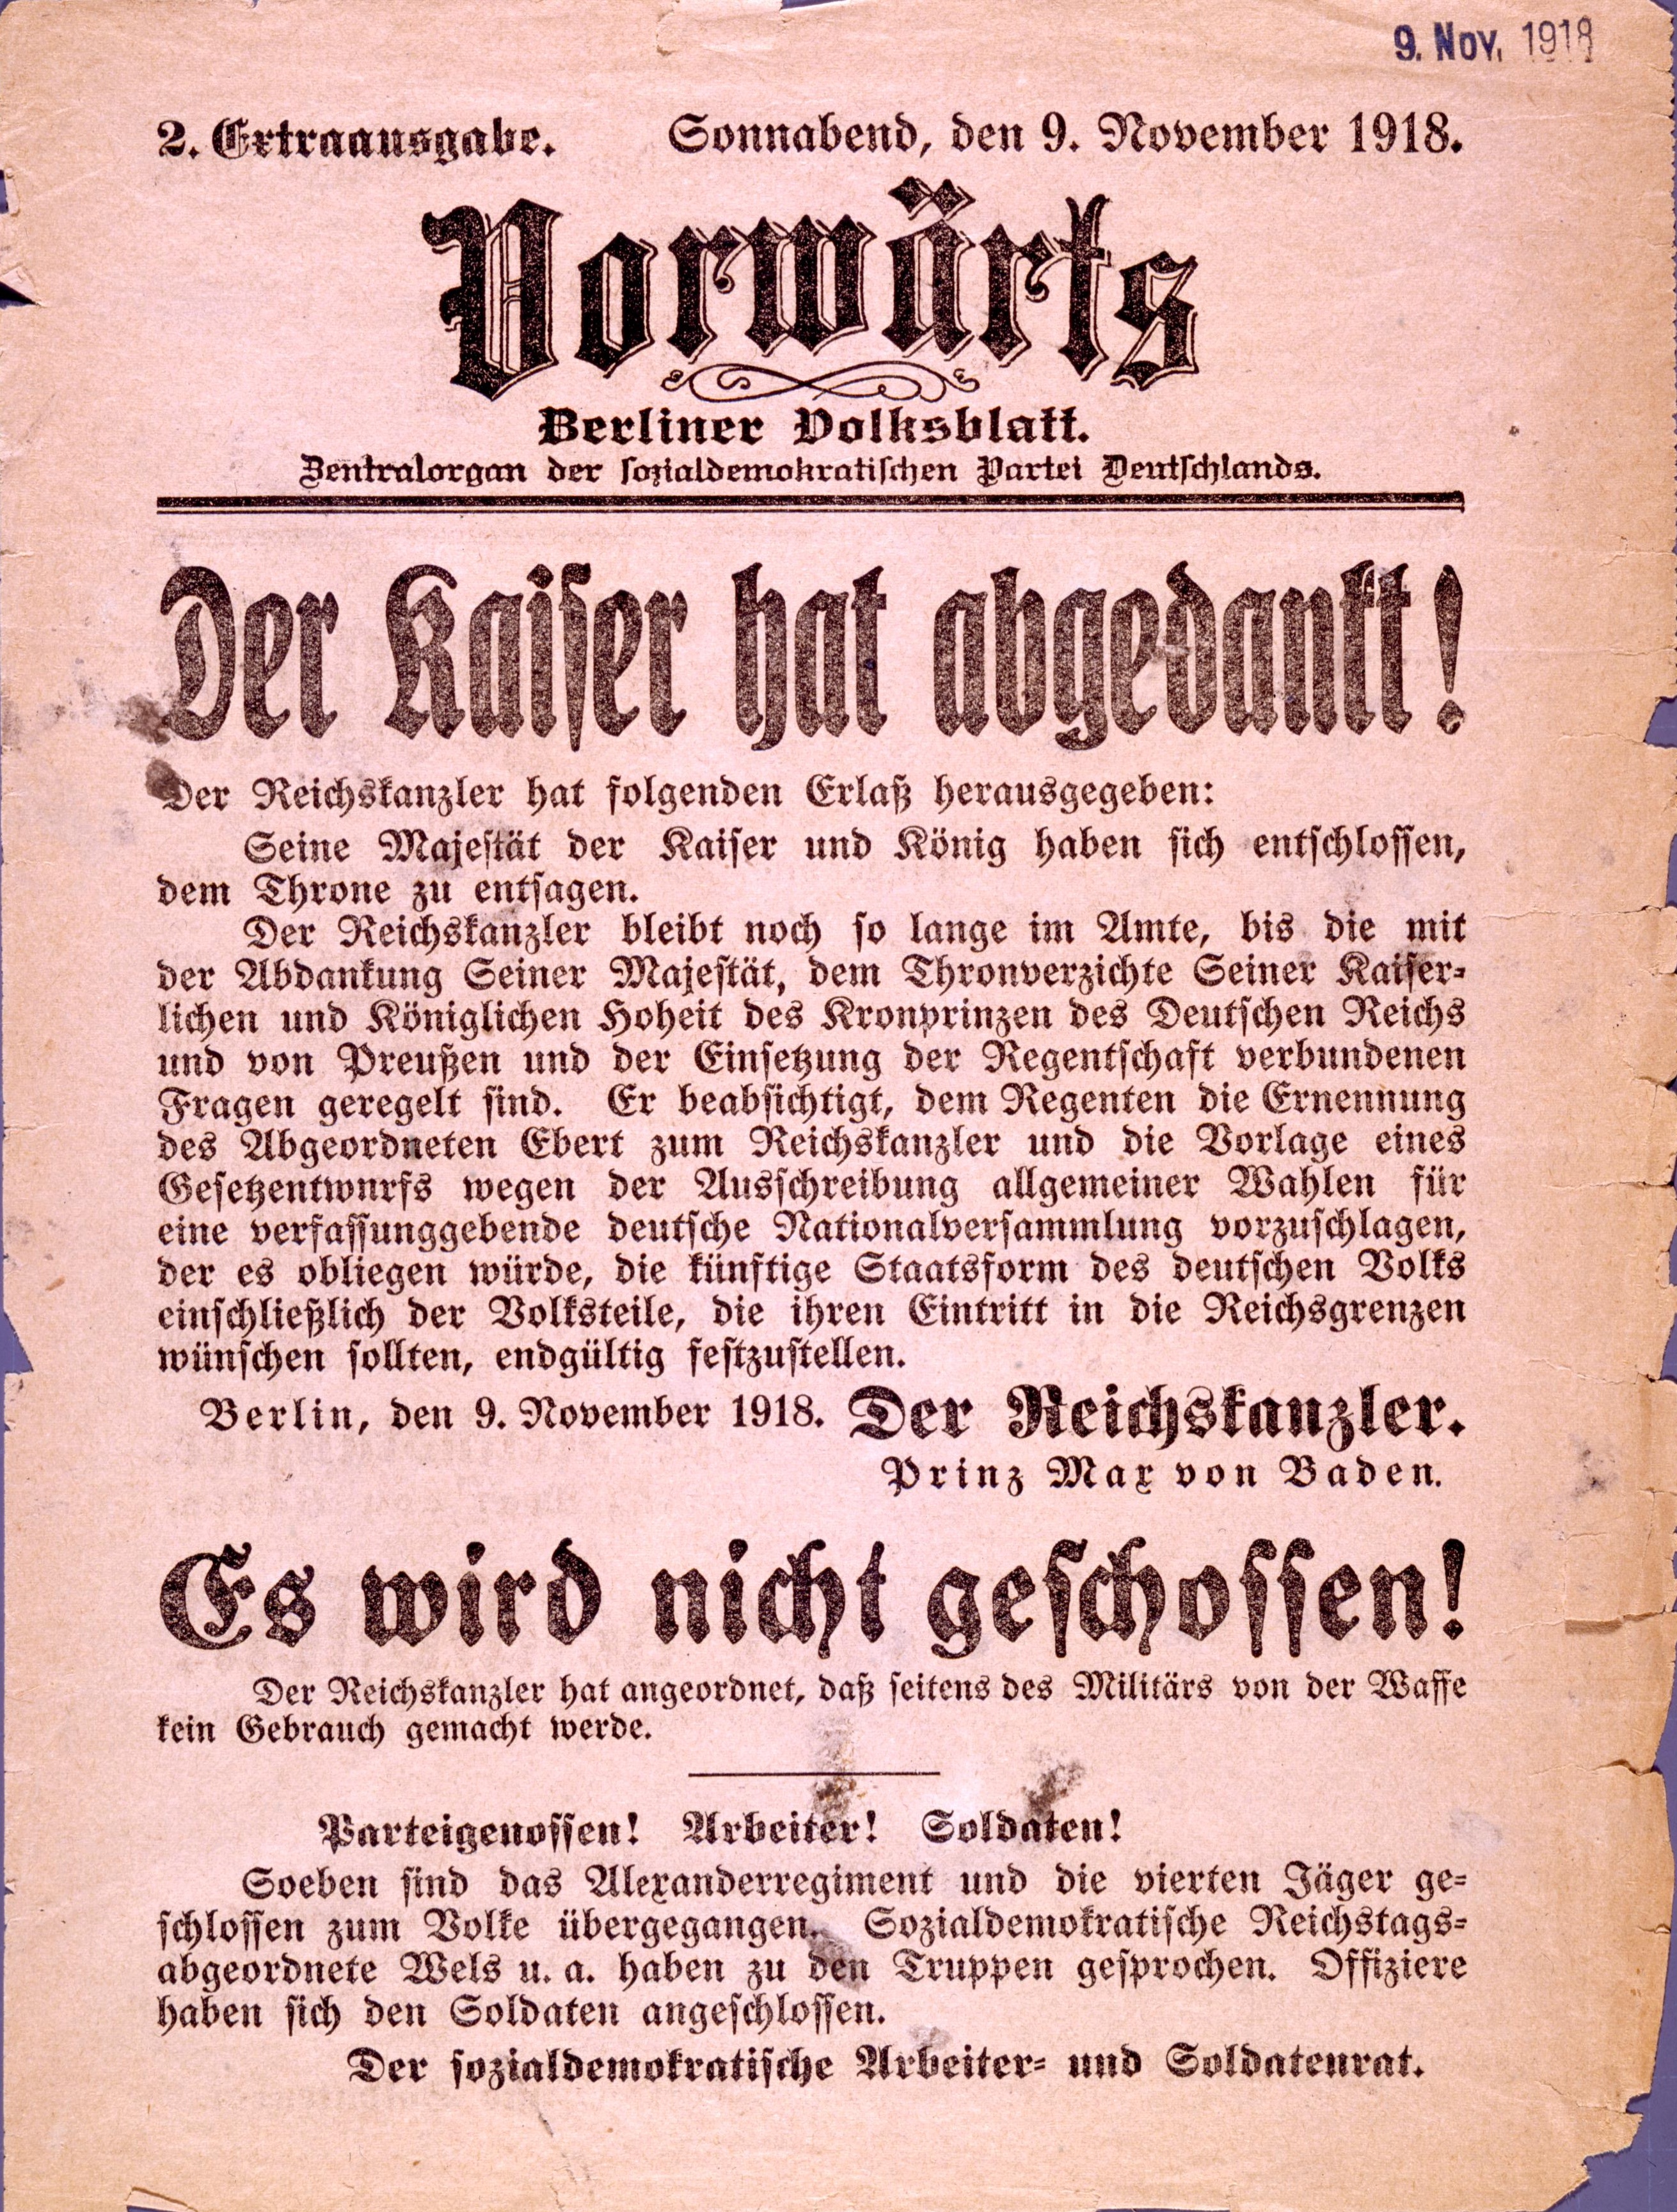 [Druckgut: "Der Kaiser hat abgedankt", 1918]